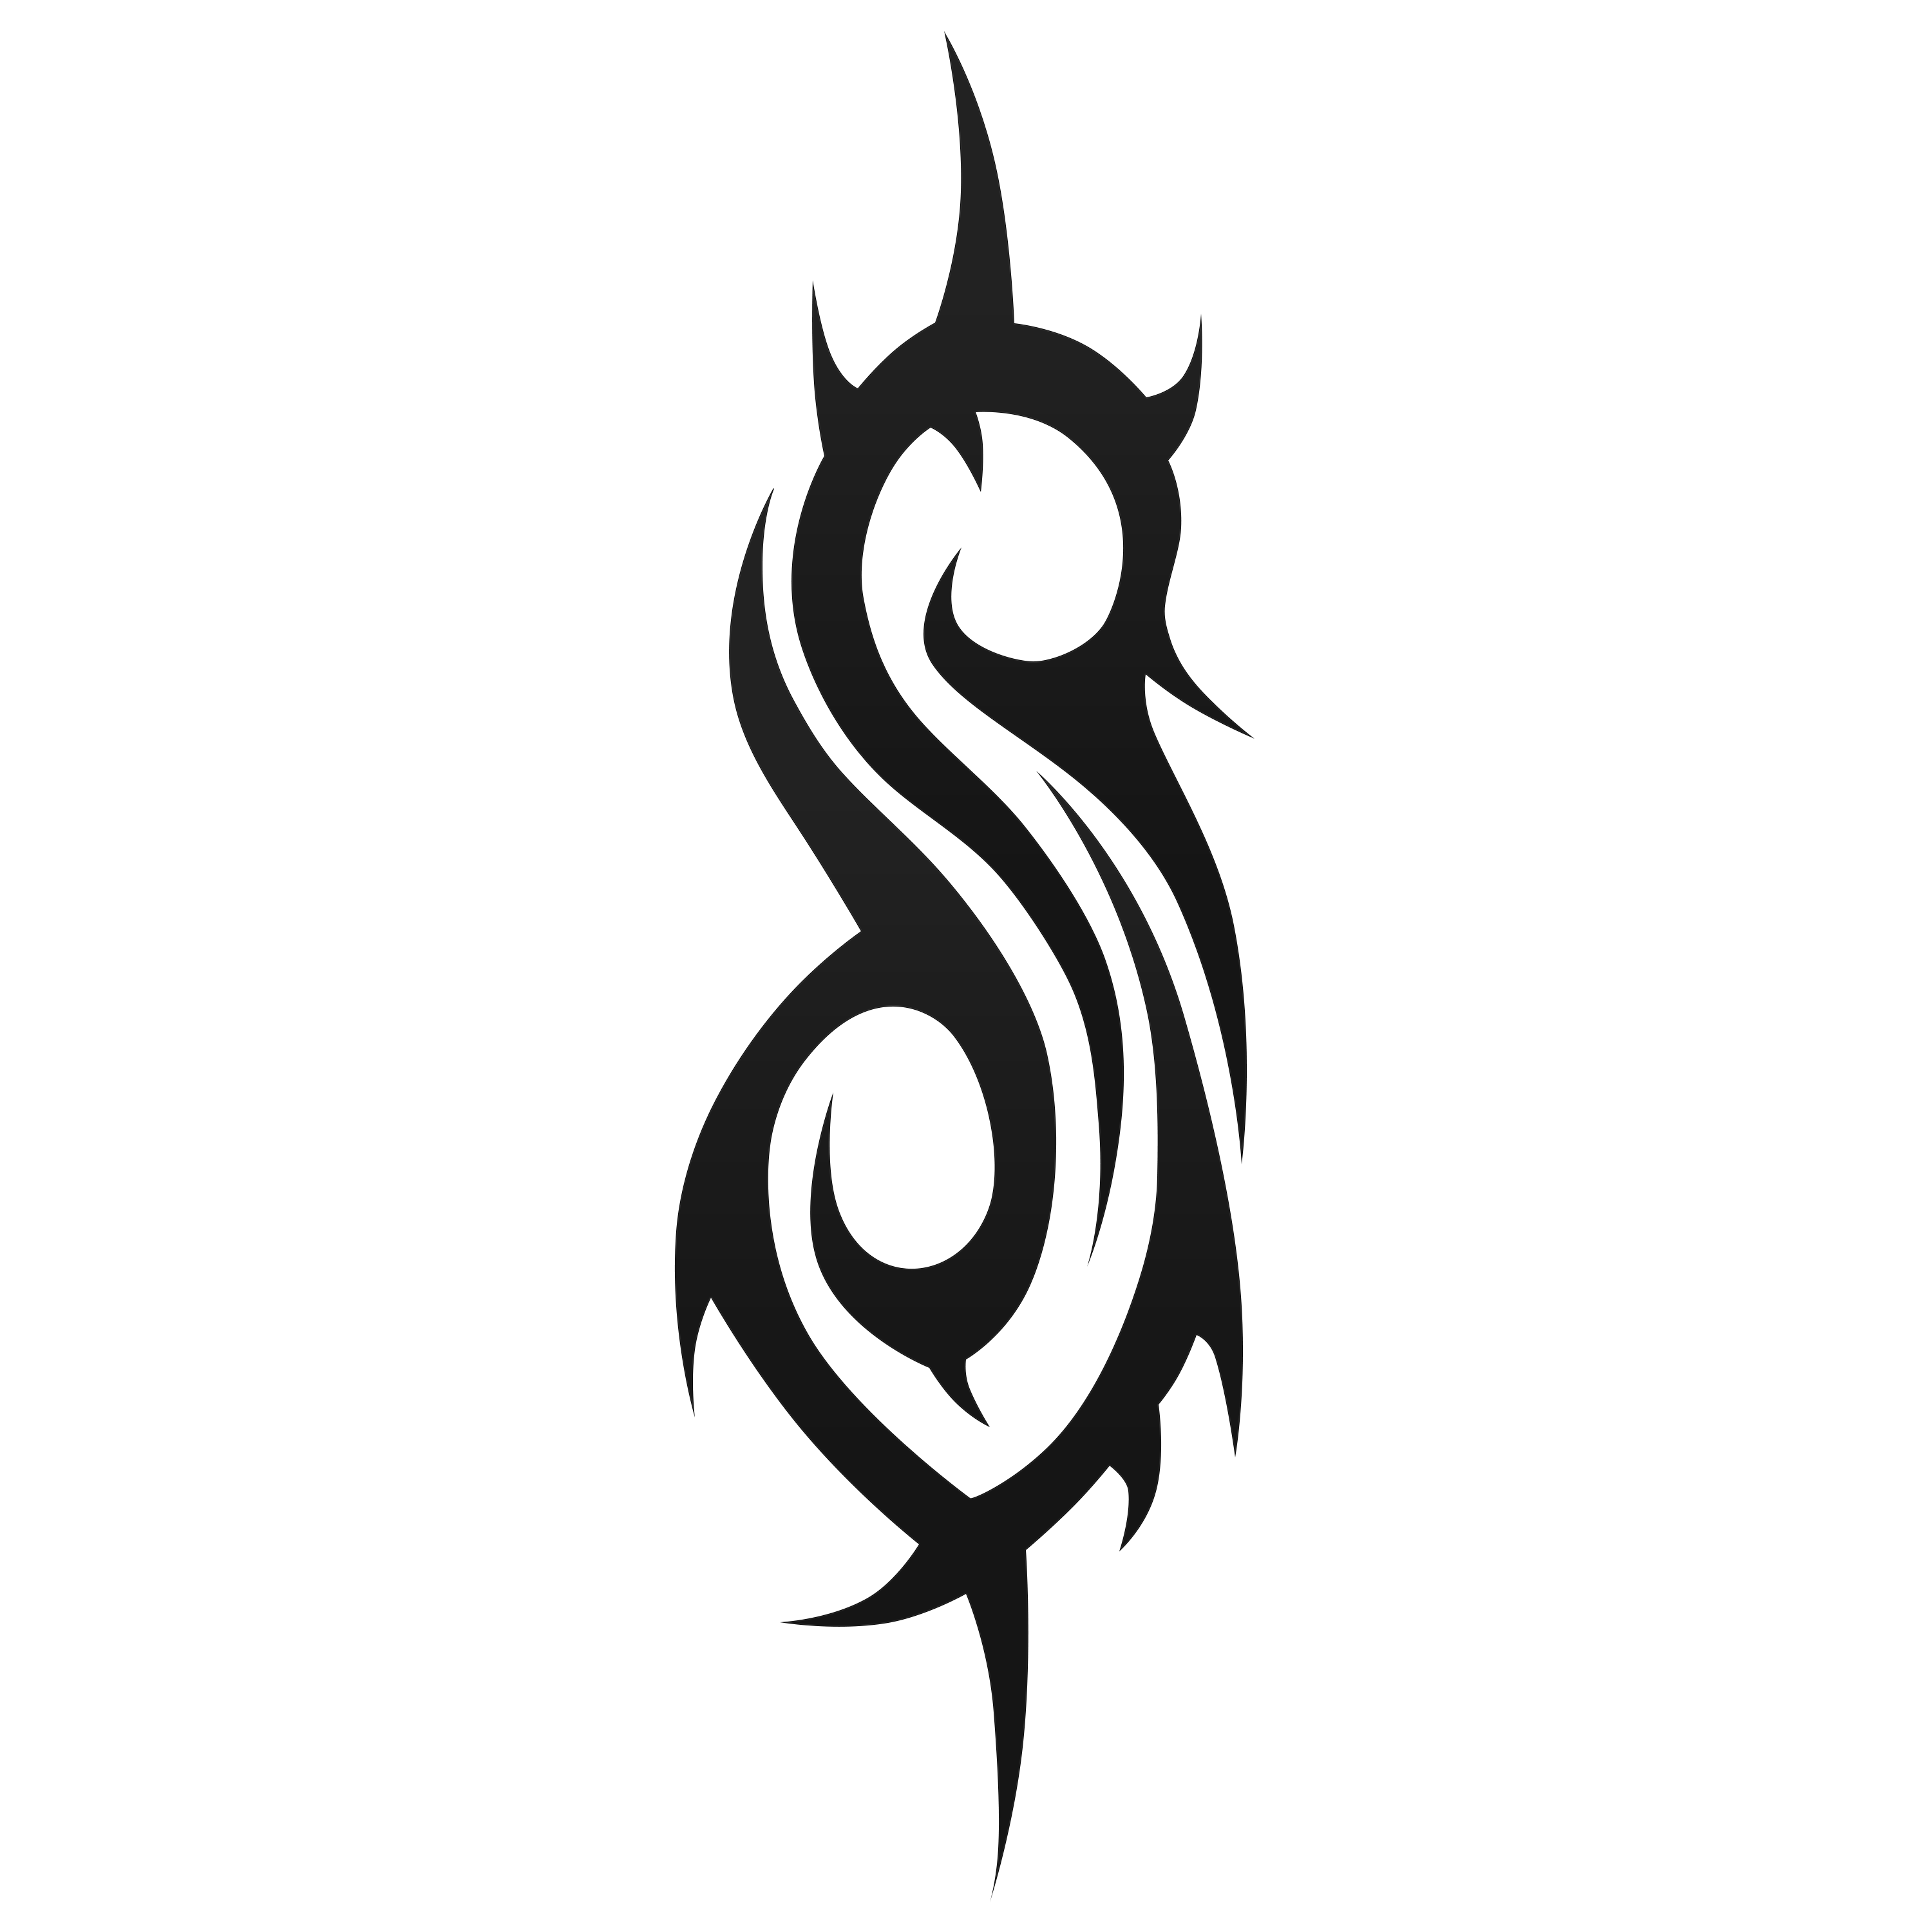 Grim reaper clipart gram. Slipknot logos blog tattoos